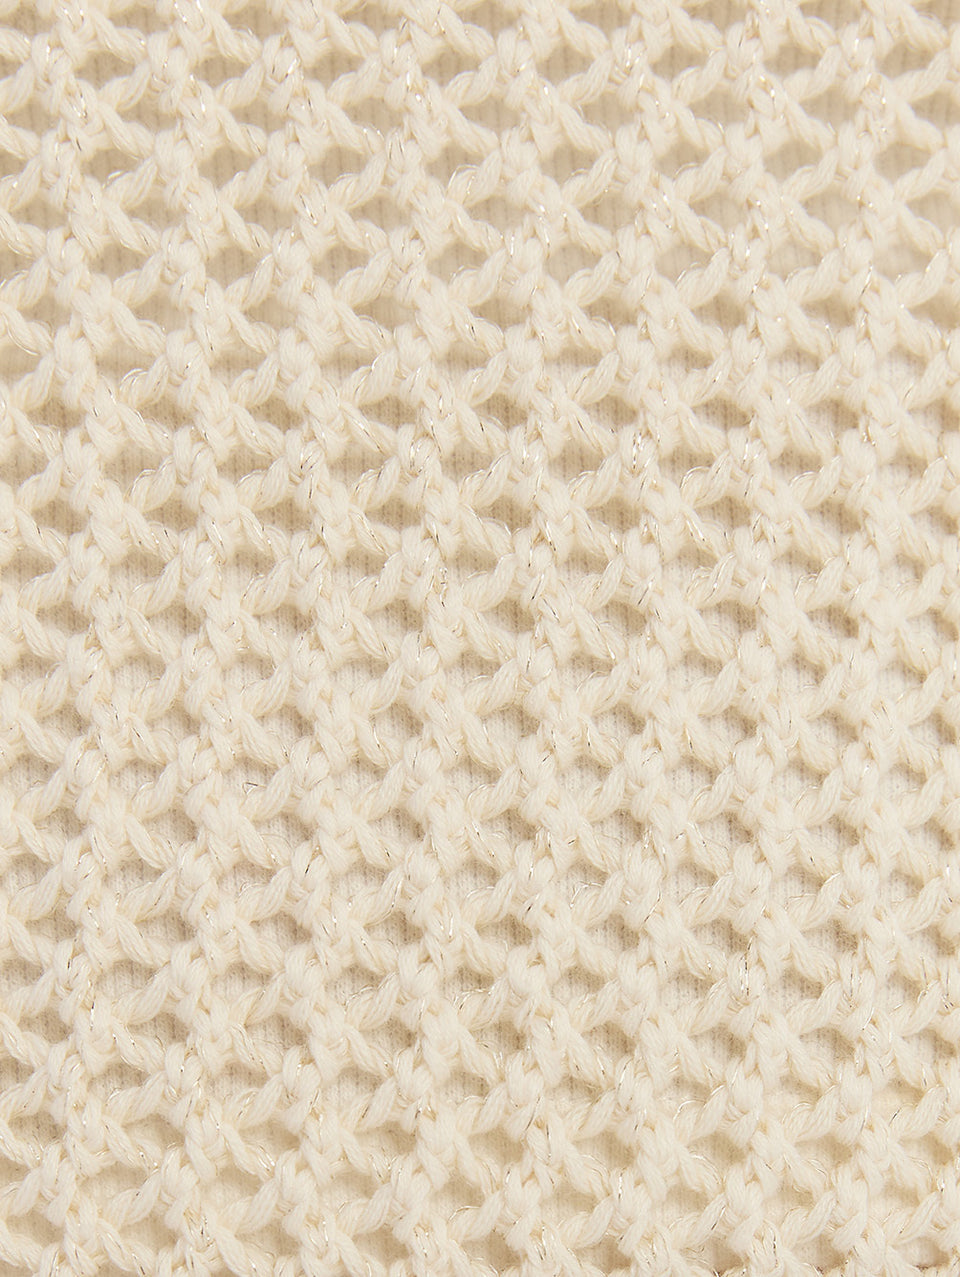 KIVARI Eliana Knit - Close up detail of knit